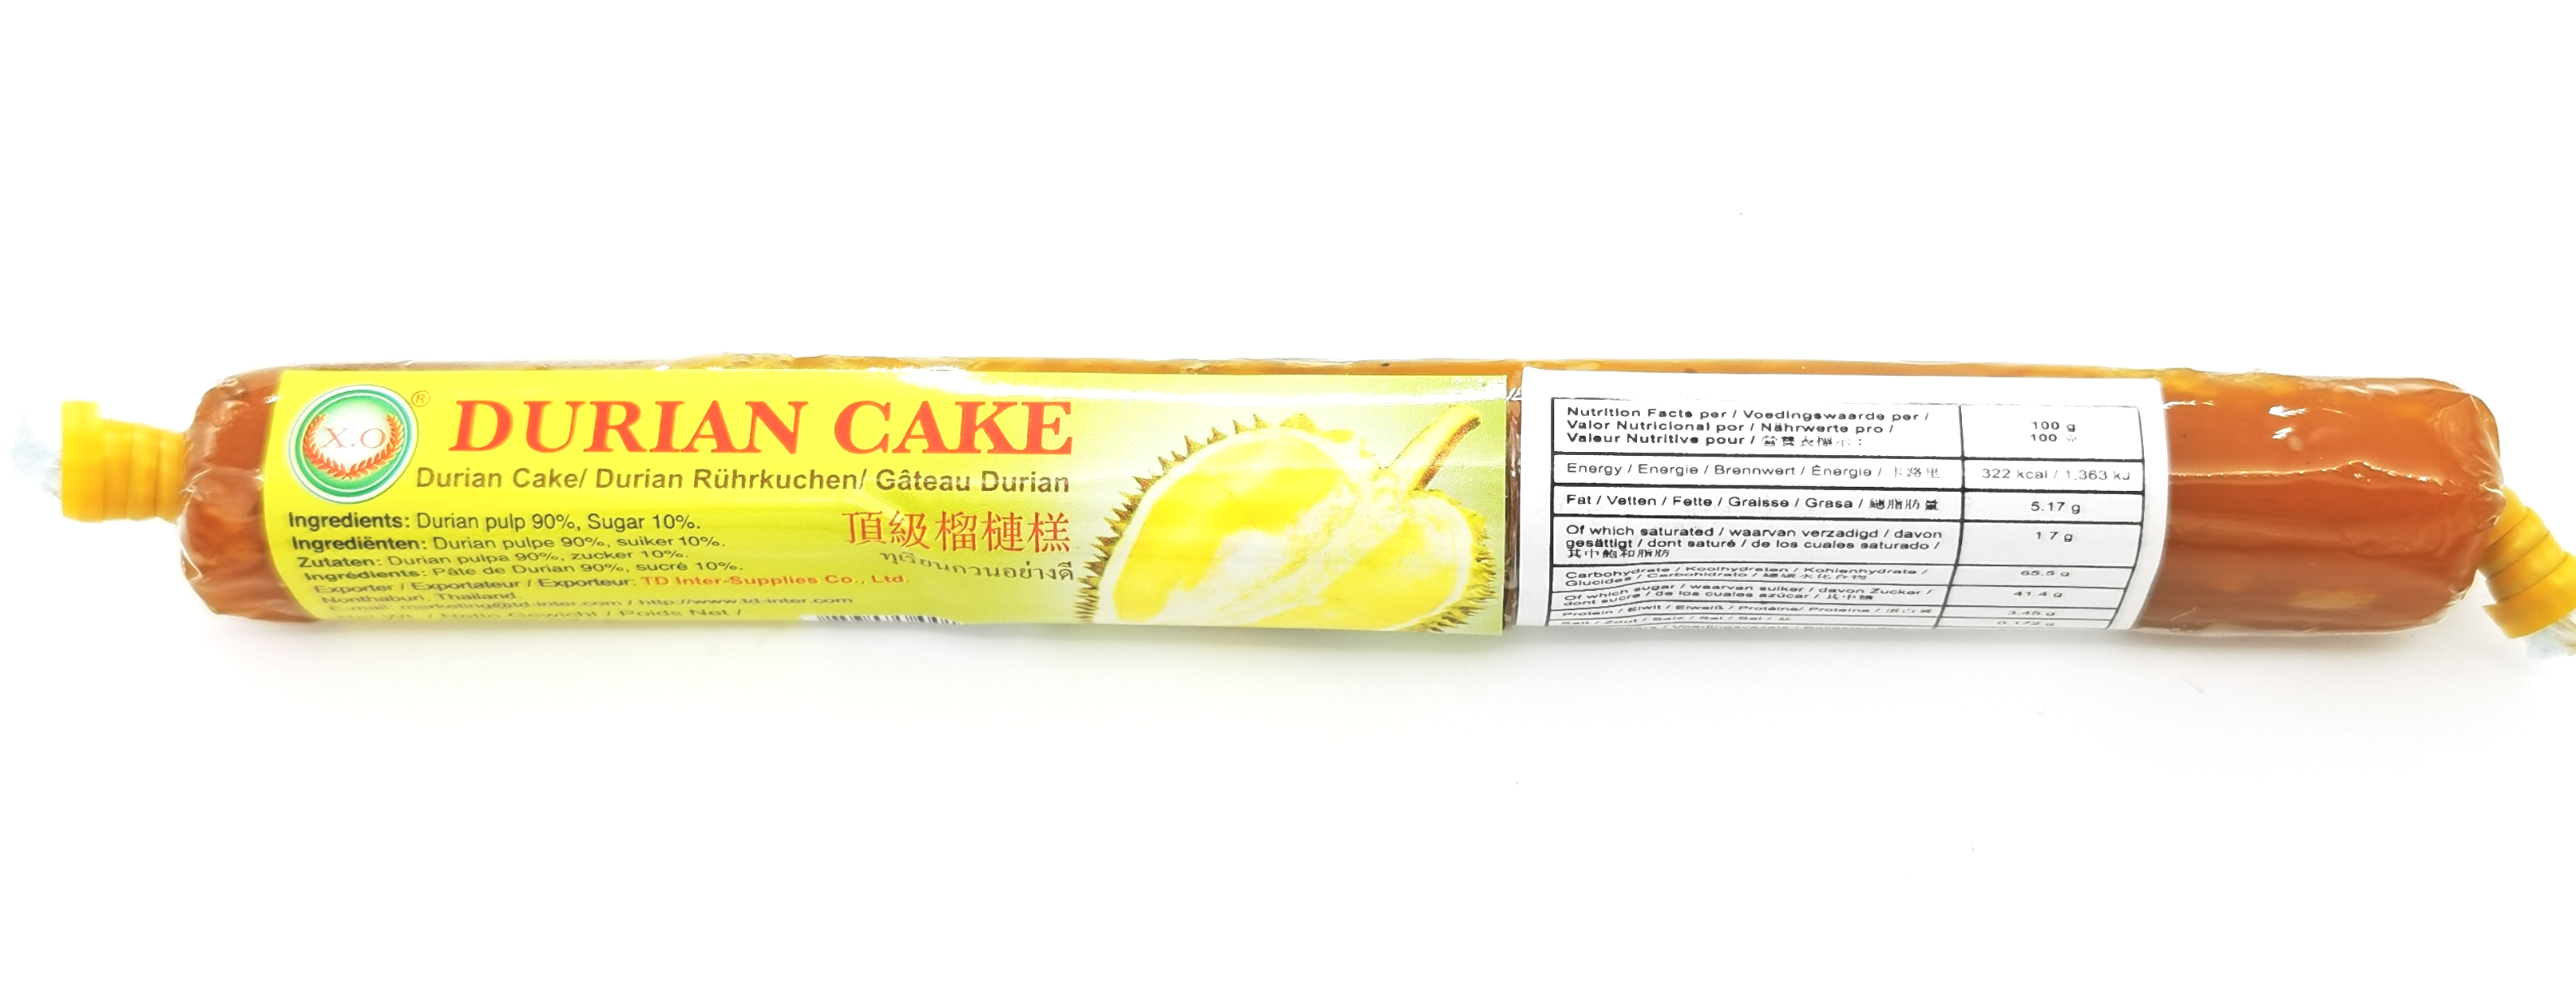 XO Durian Cake 100g